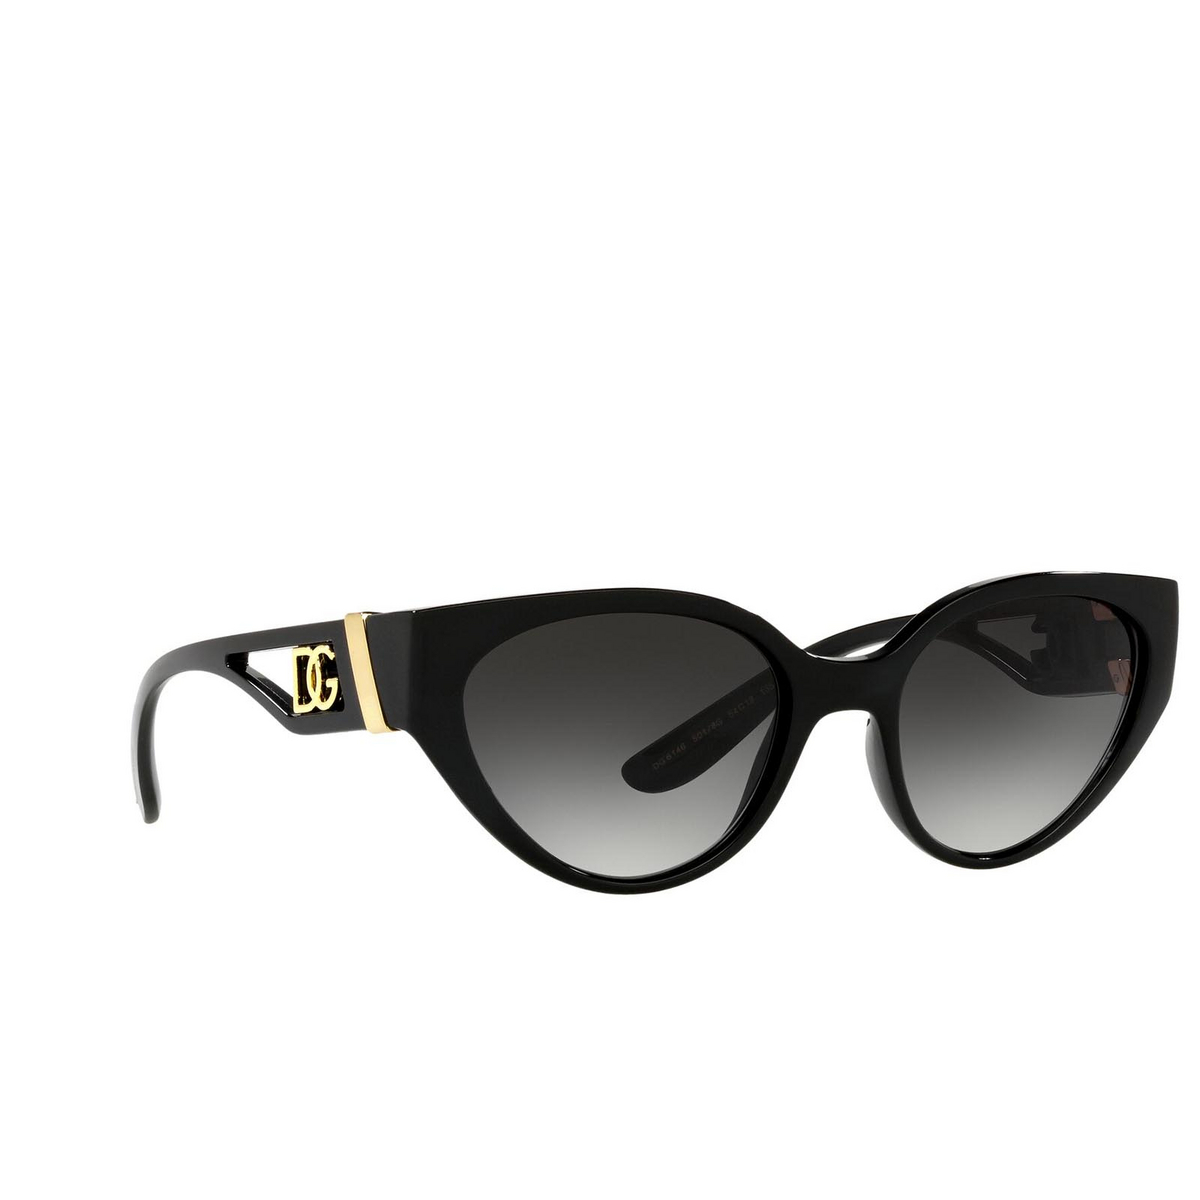 Dolce & Gabbana® Cat-eye Sunglasses: DG6146 color Black 501/8G - three-quarters view.